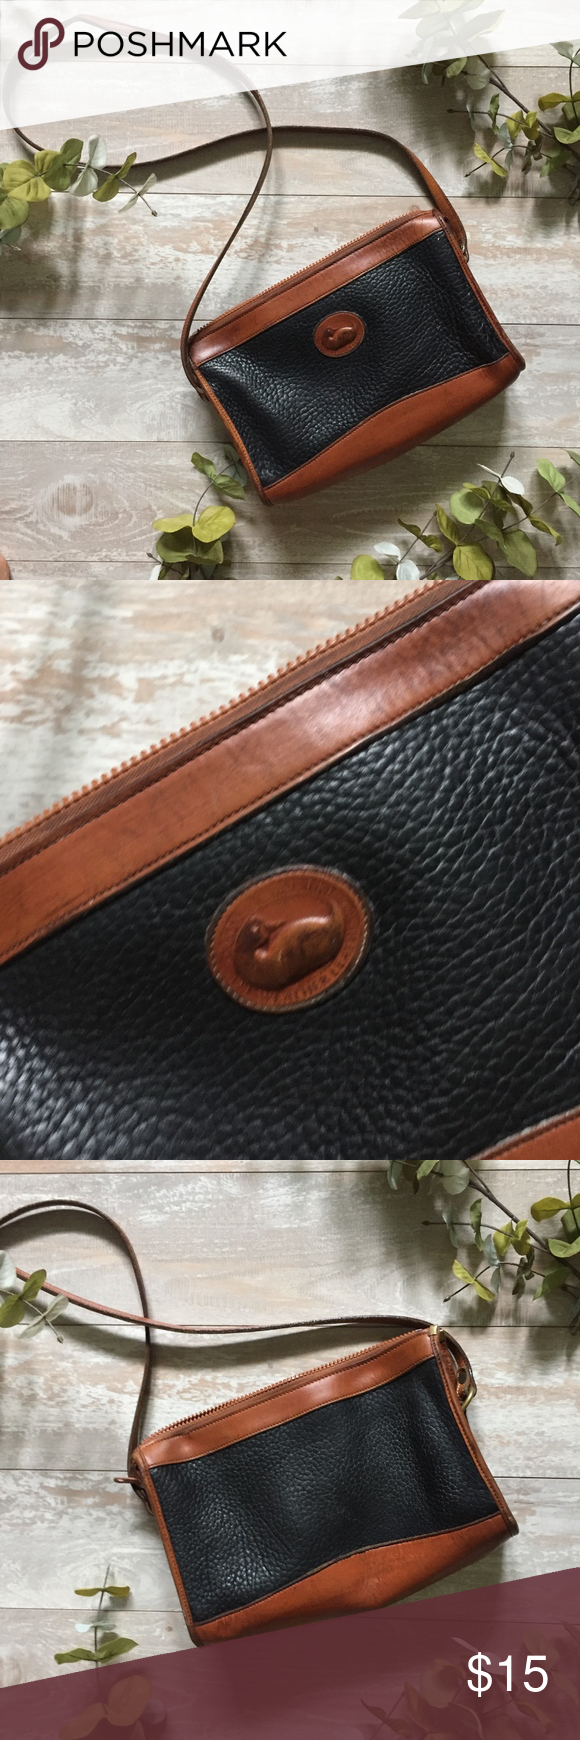 how to authenticate dooney and bourke handbag